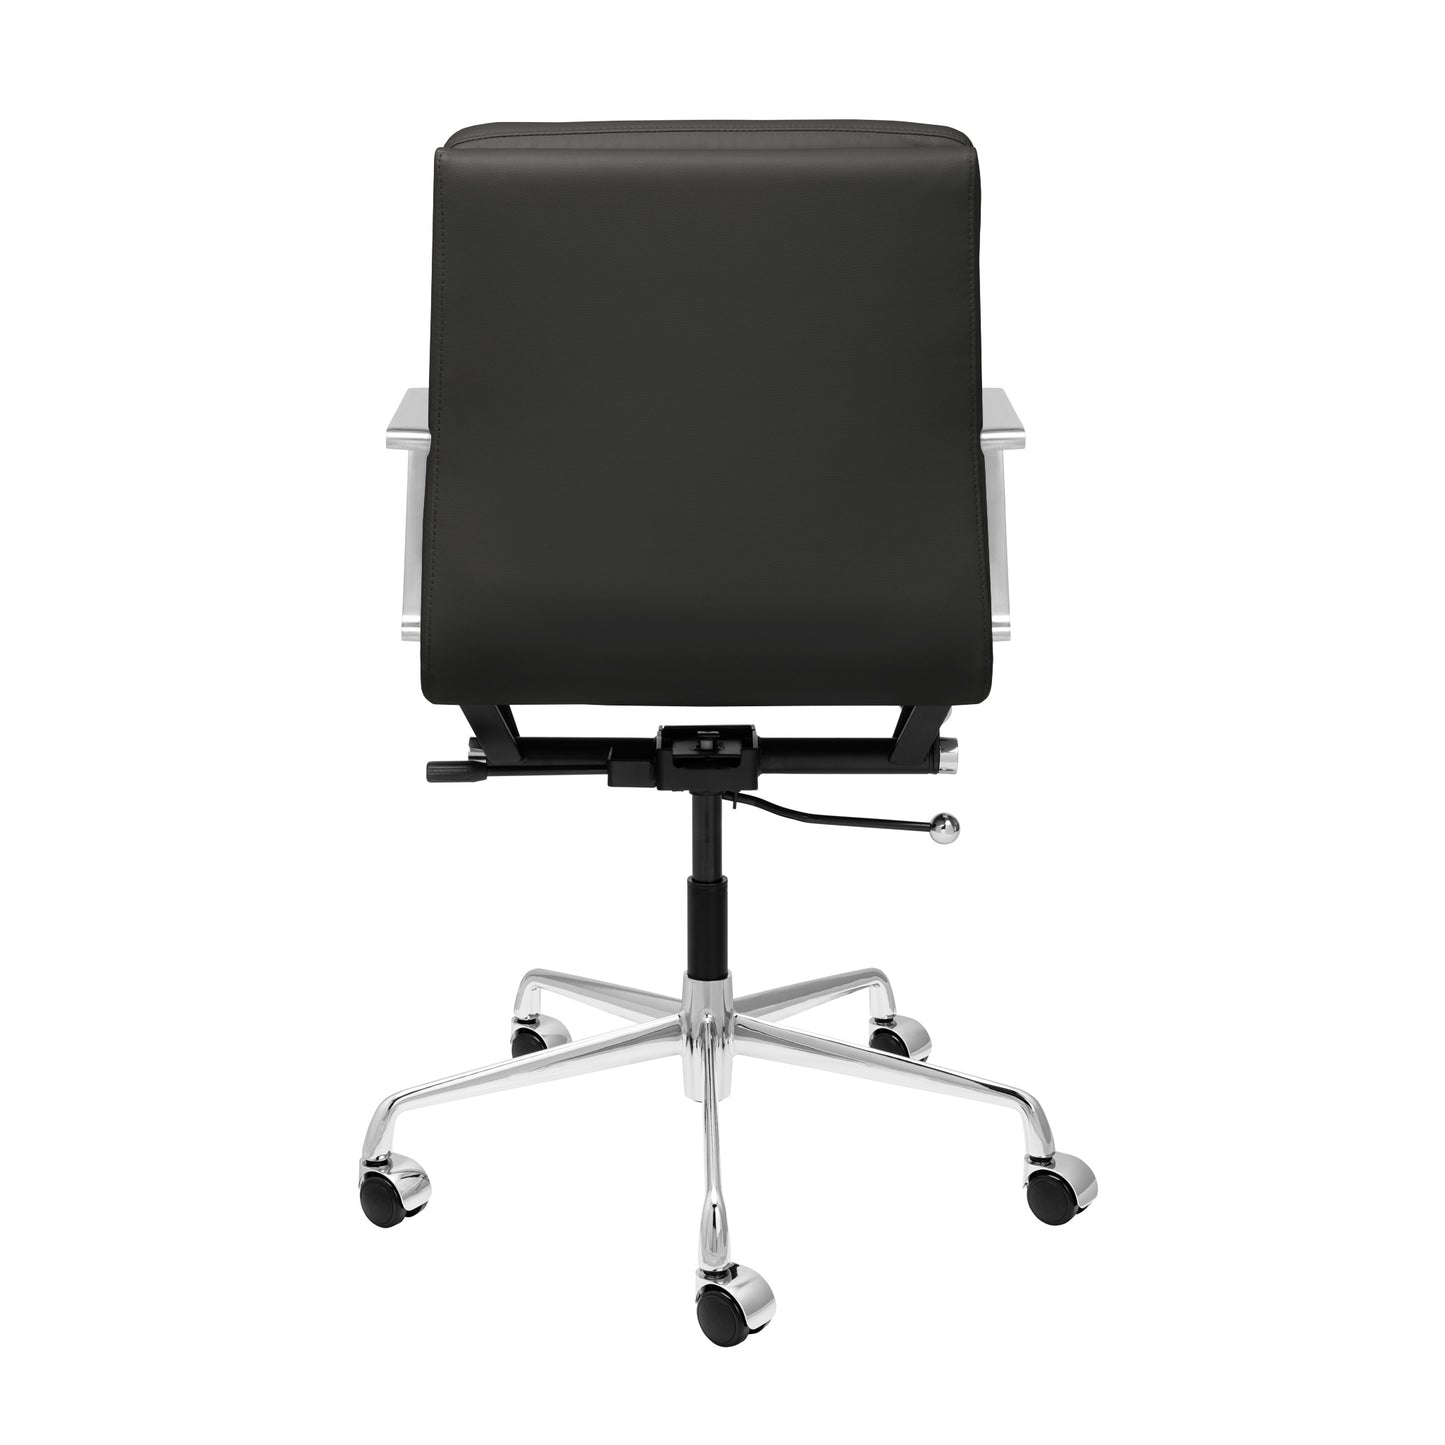 SOHO II Padded Management Chair (Black)